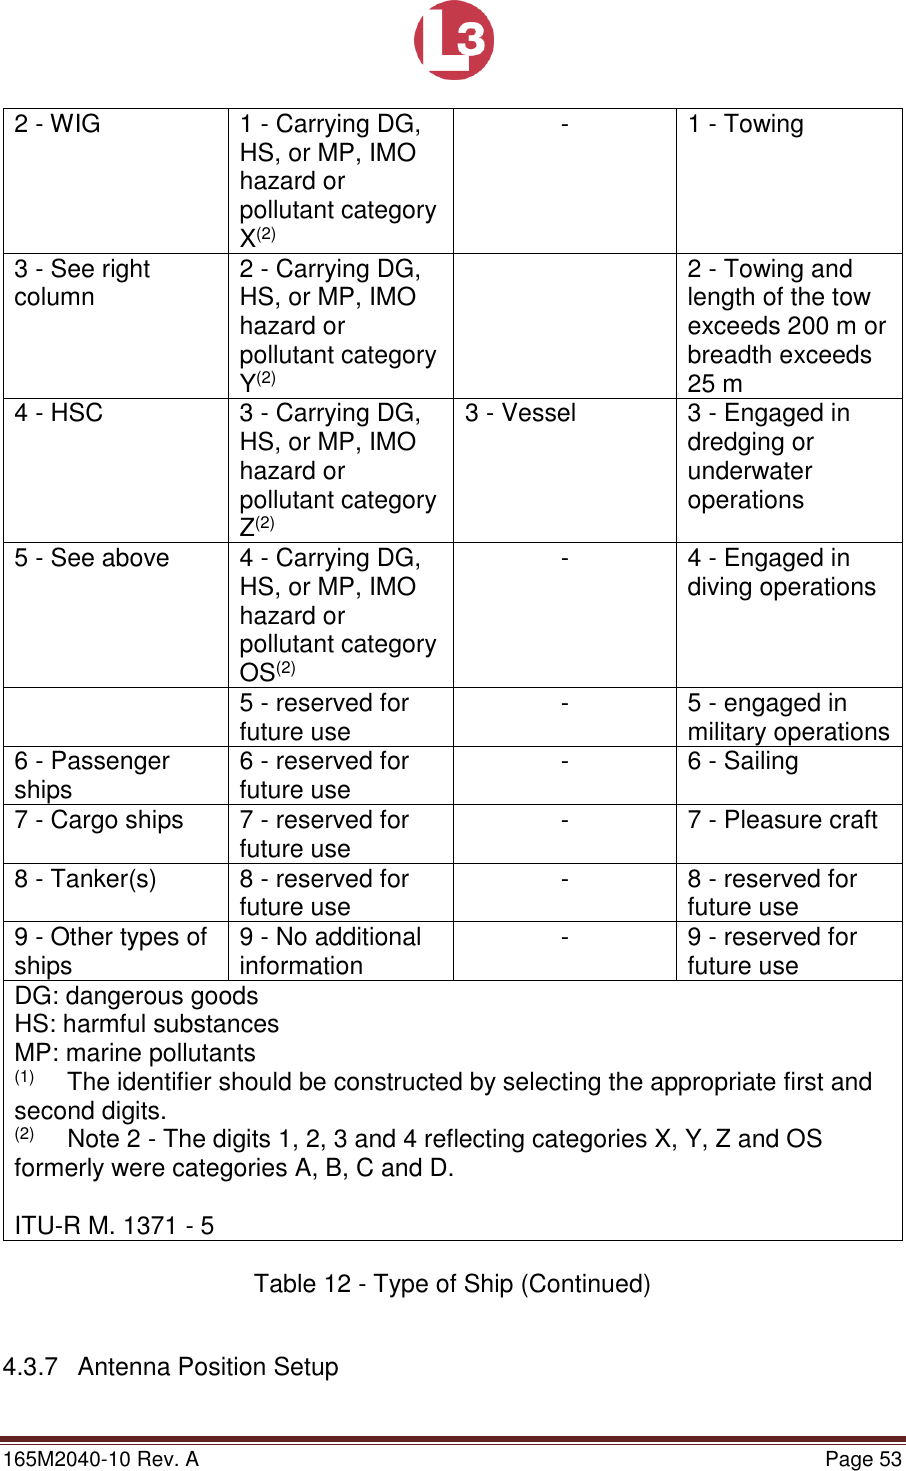 Page 53 of L3 Technologies AISA6 Shipboard Mobile AIS User Manual Memory Verification Procedure